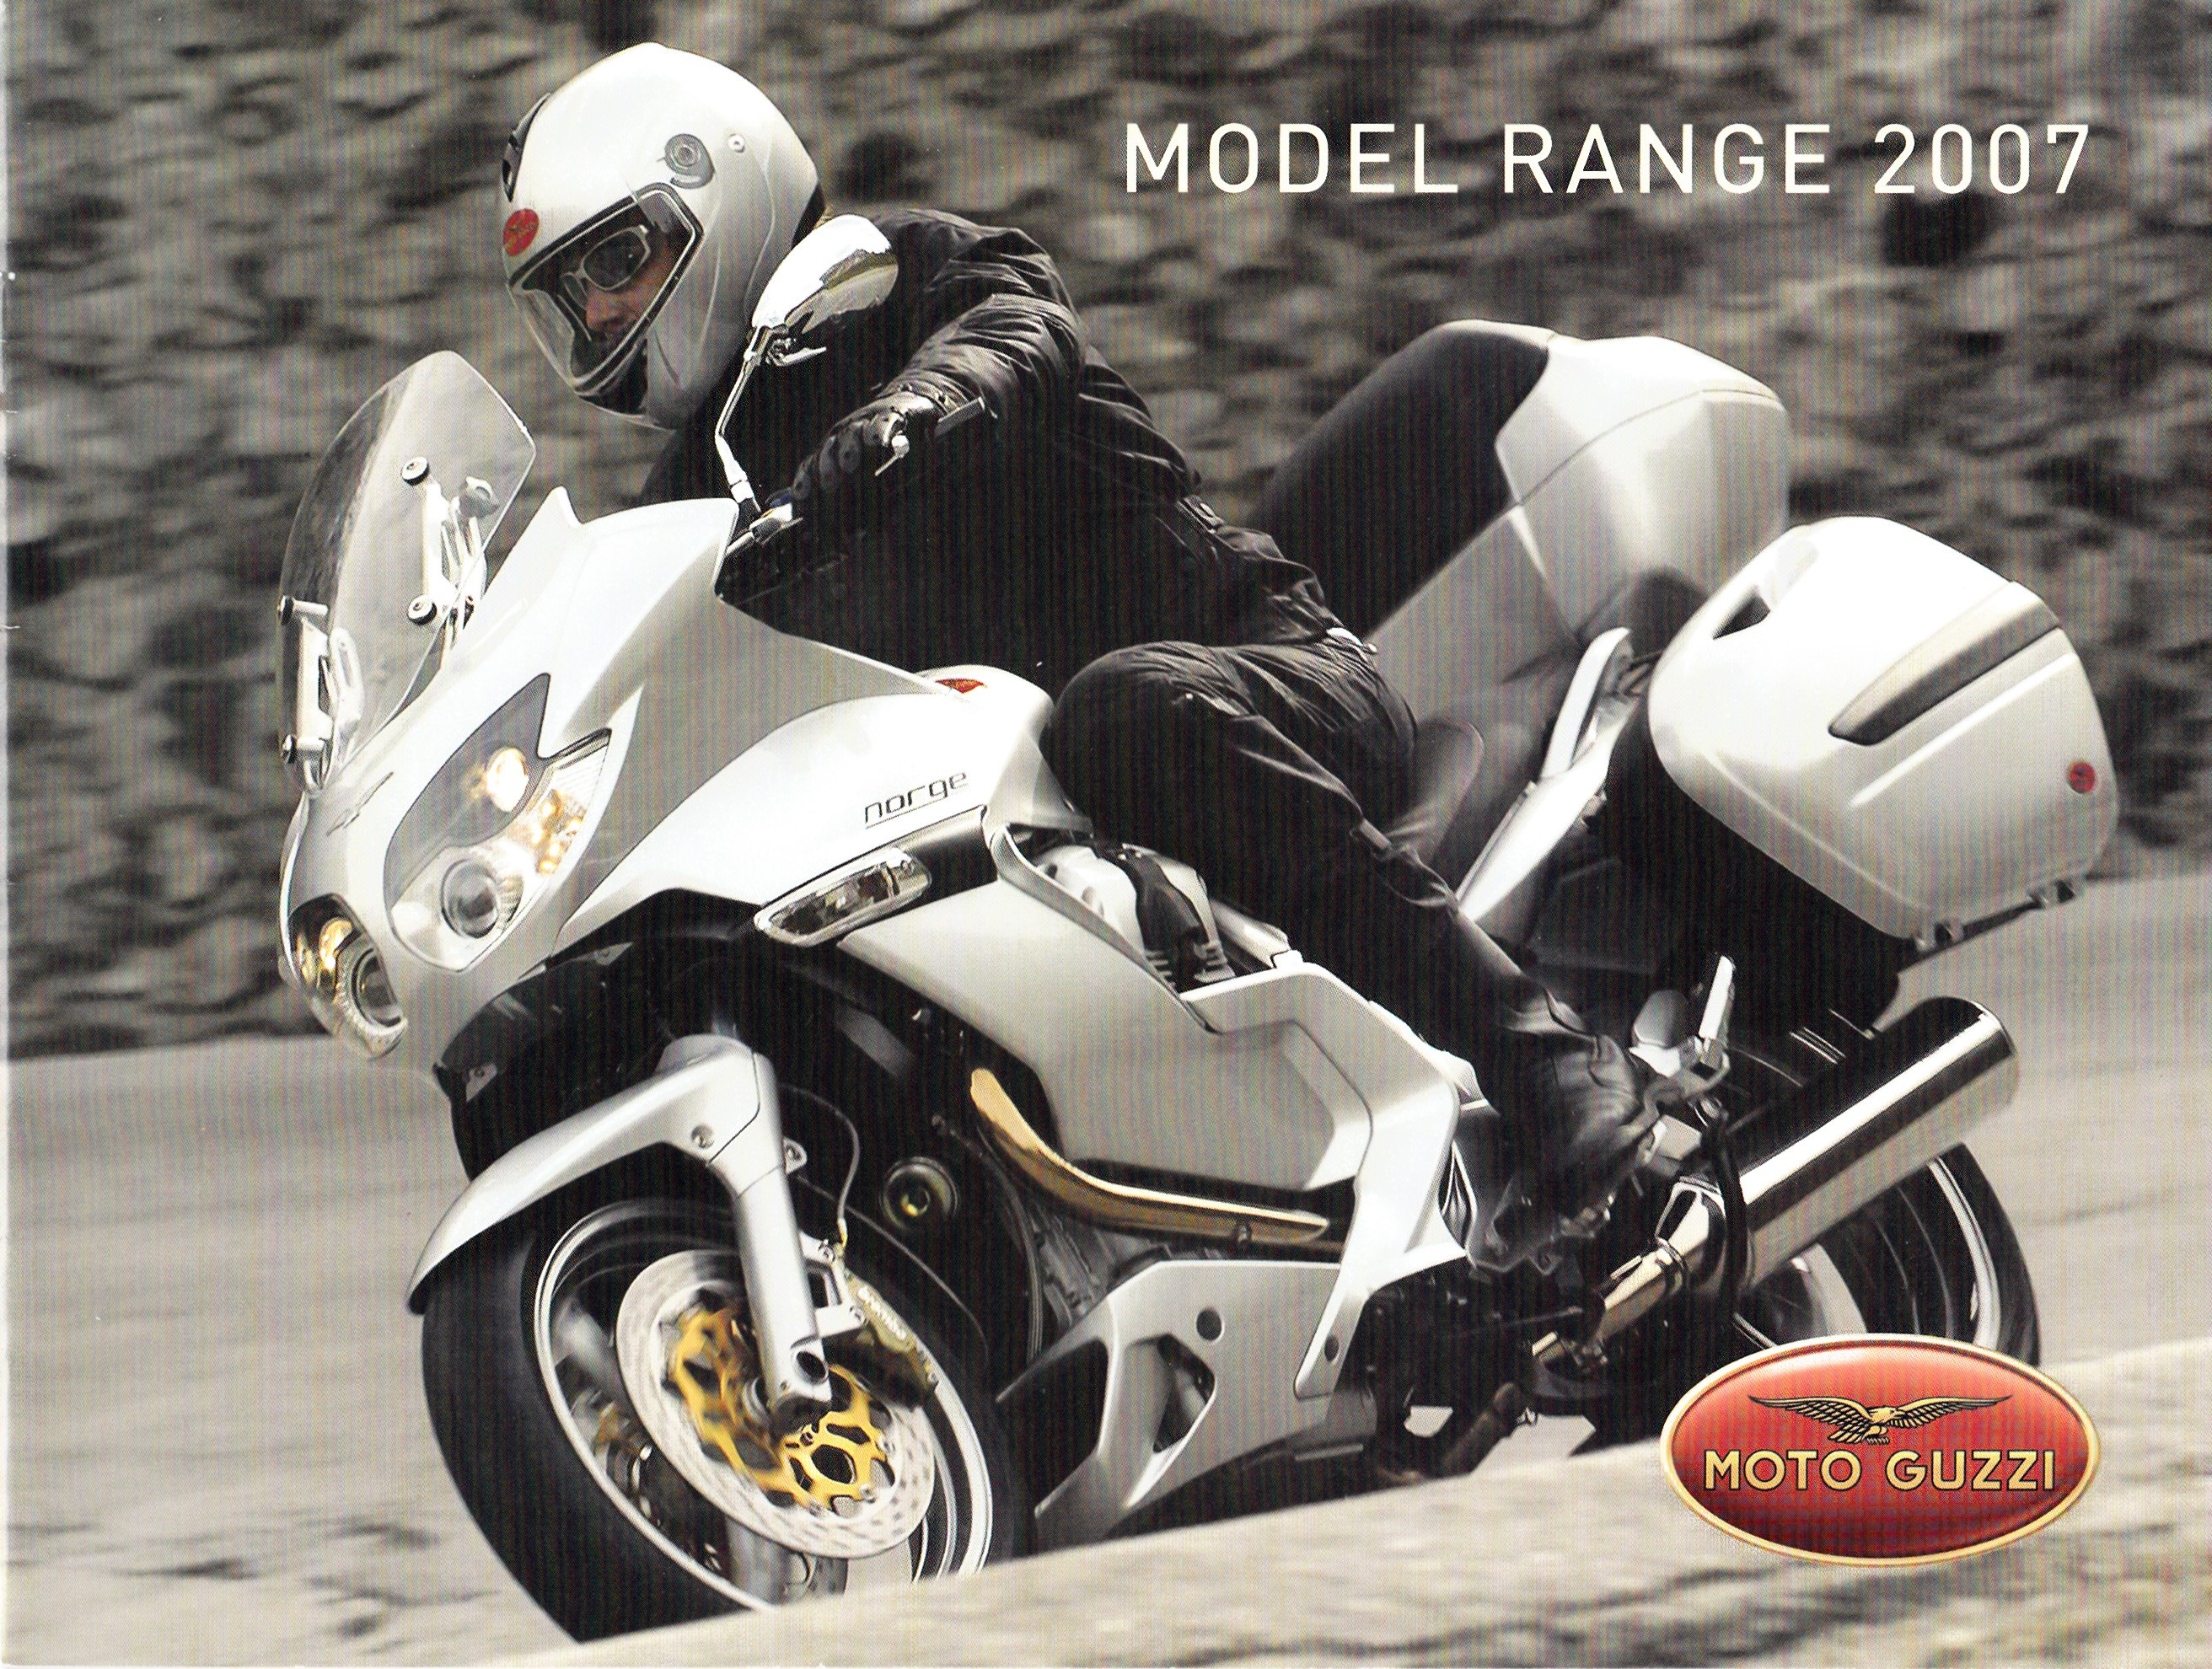 Brochure - Moto Guzzi Model Range 2007